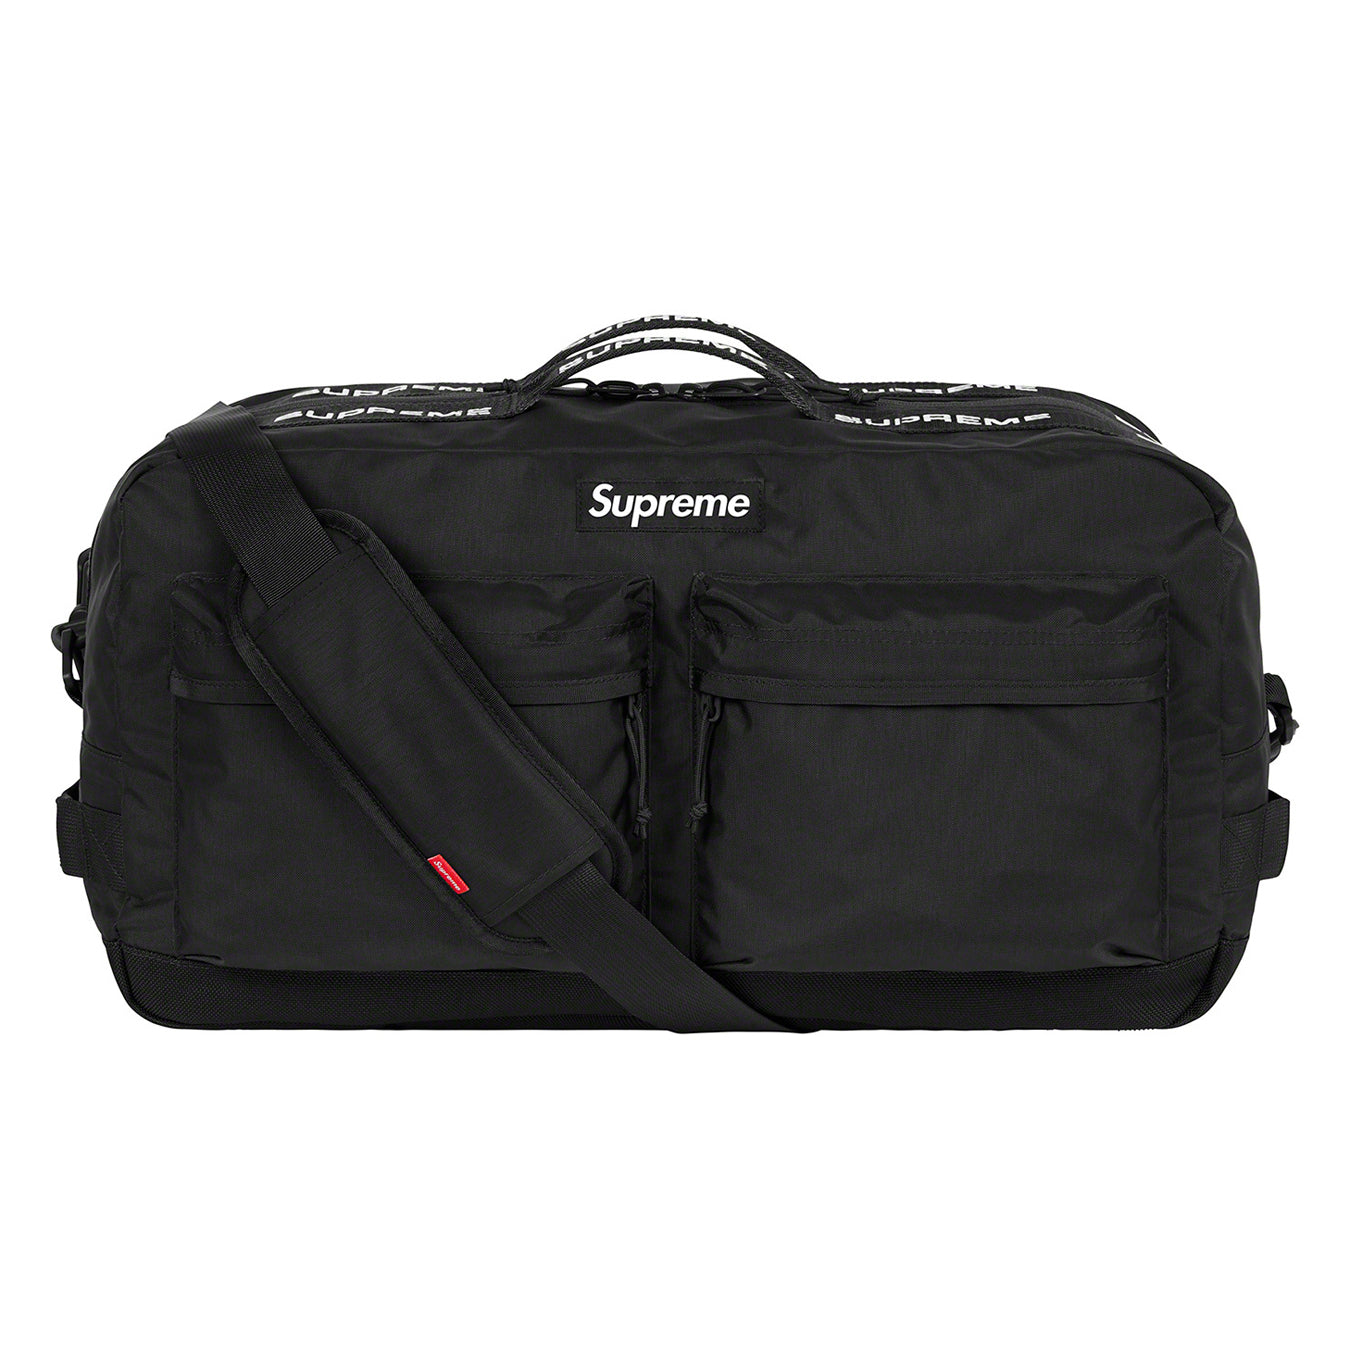 Supreme Duffle Bag "Black"